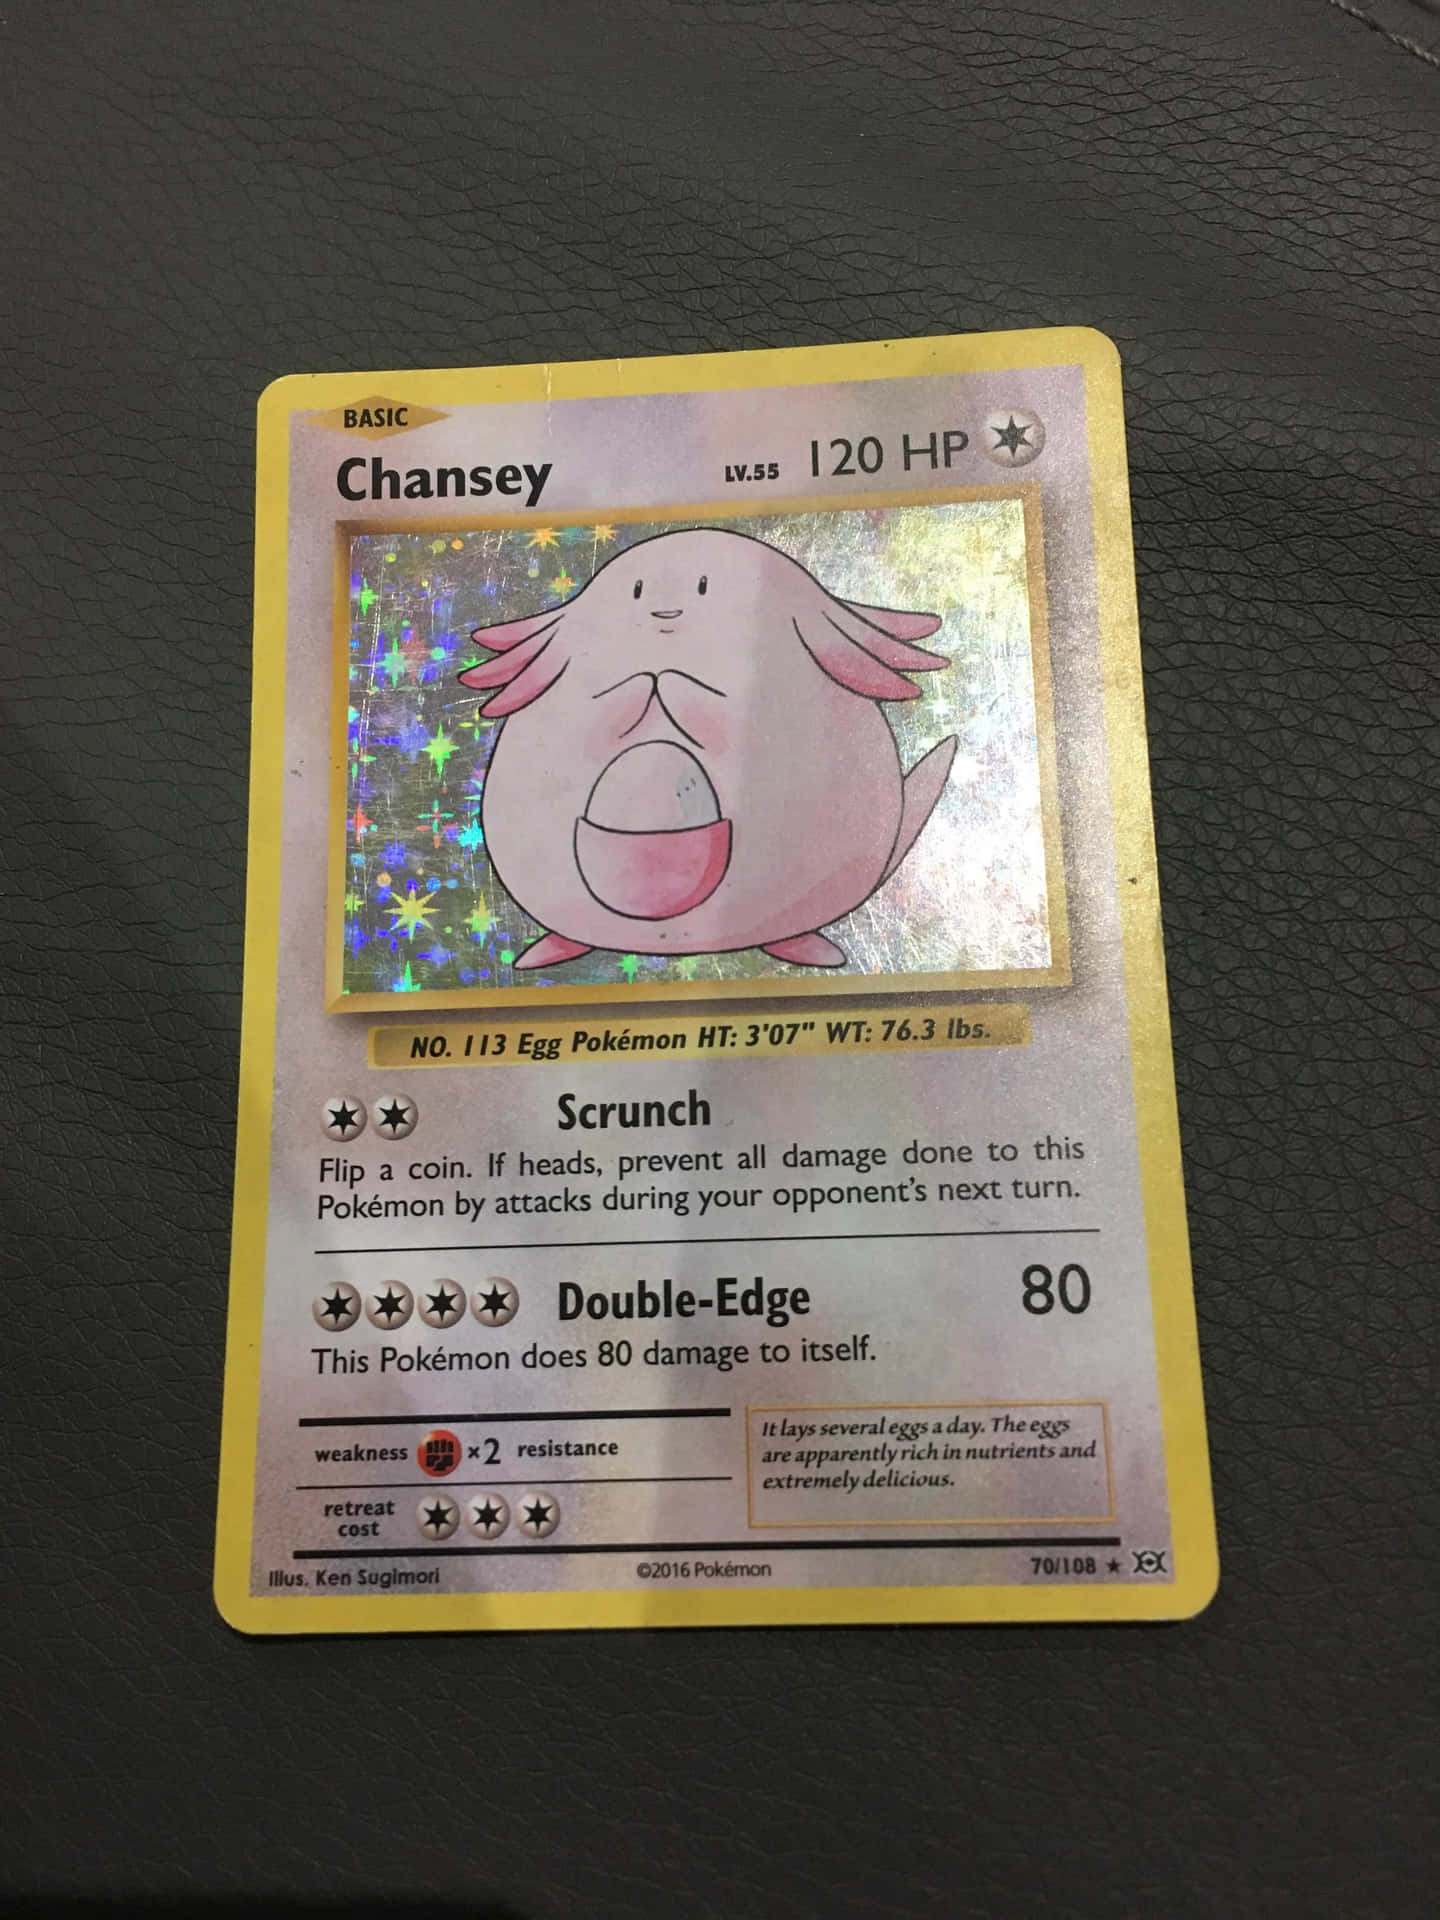 Fondode Pantalla De La Carta De Pokémon Chansey Rosa.